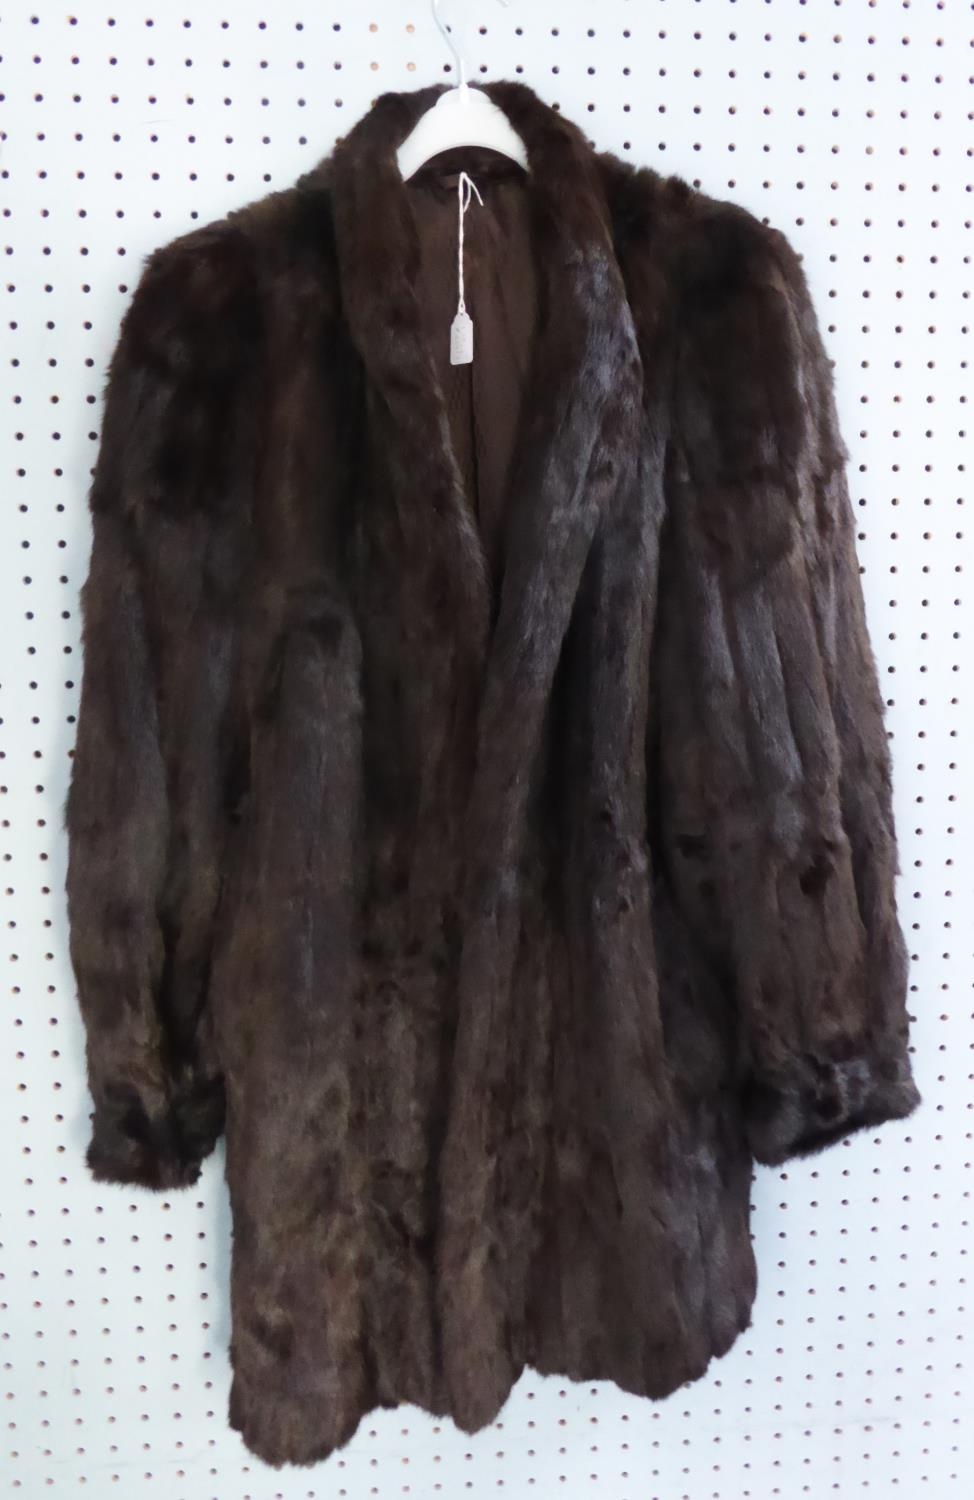 LADY'S DARK BROWN DYED ERMINE FUR COAT, three quarter length, with narrow shawl collar, triple